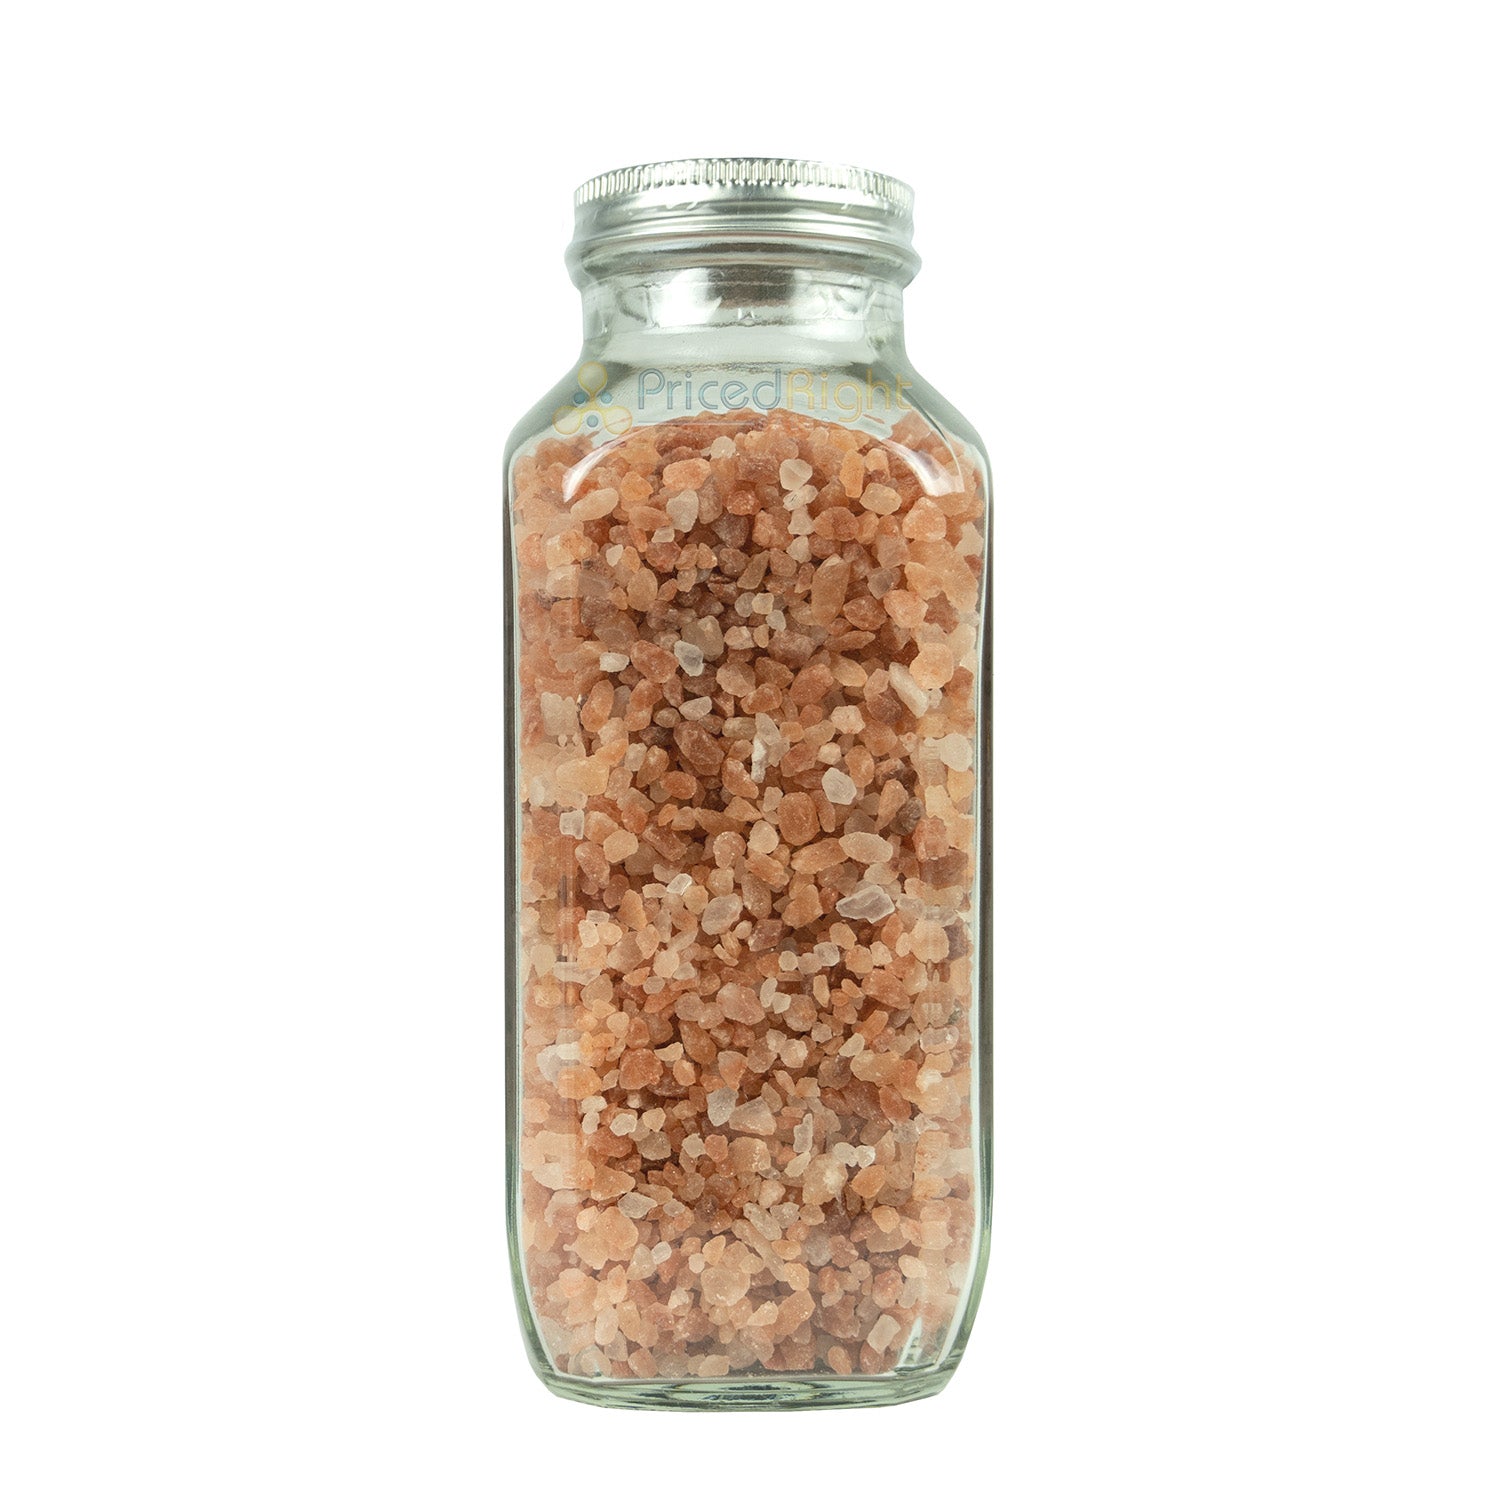 Pepper Creek Farms Himalayan Pink Sea Salt Stout Kosher Certified 20 oz Jar